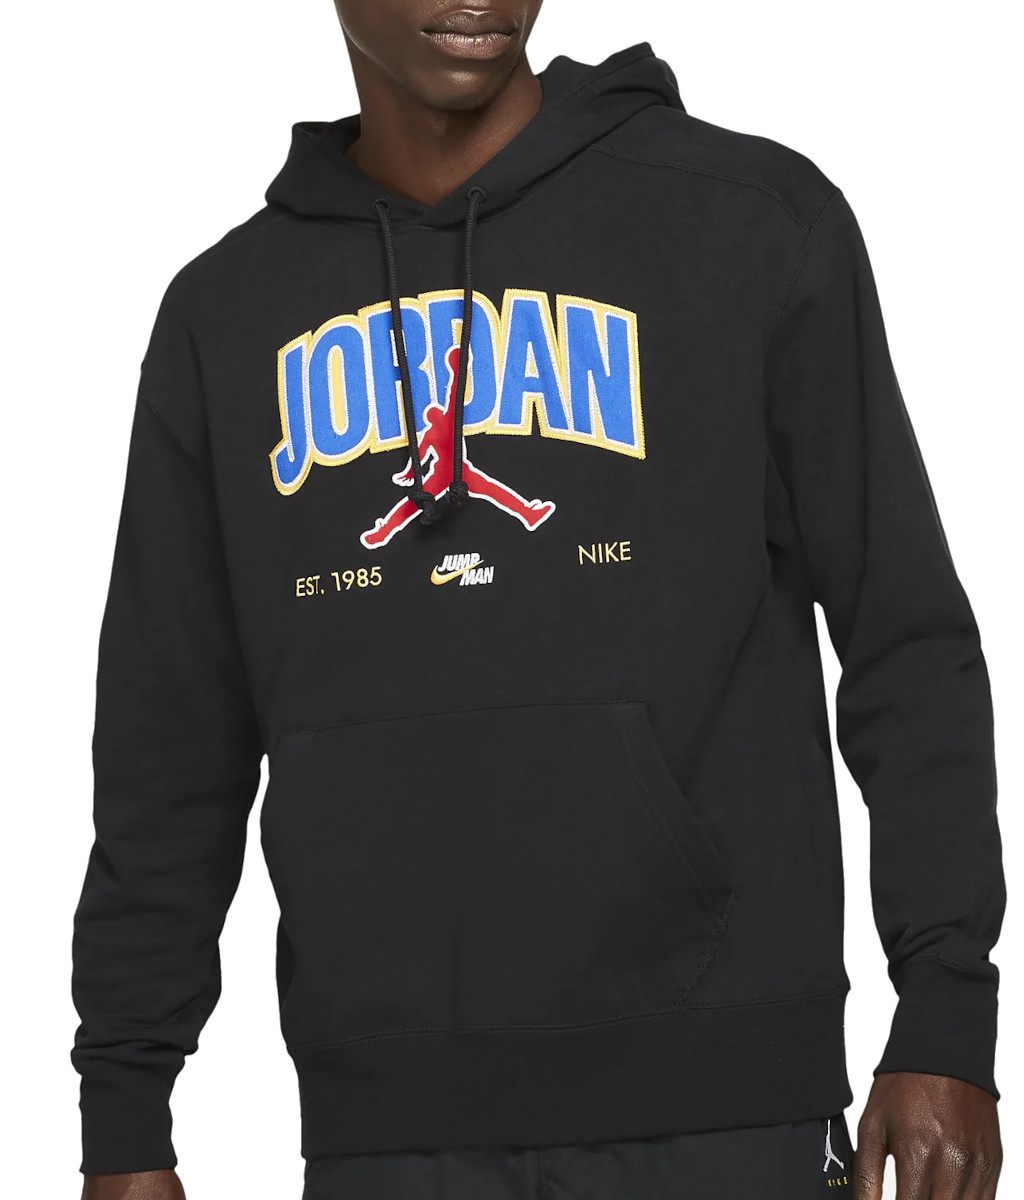 Pánská mikina s kapucí Nike Jordan Jumpman